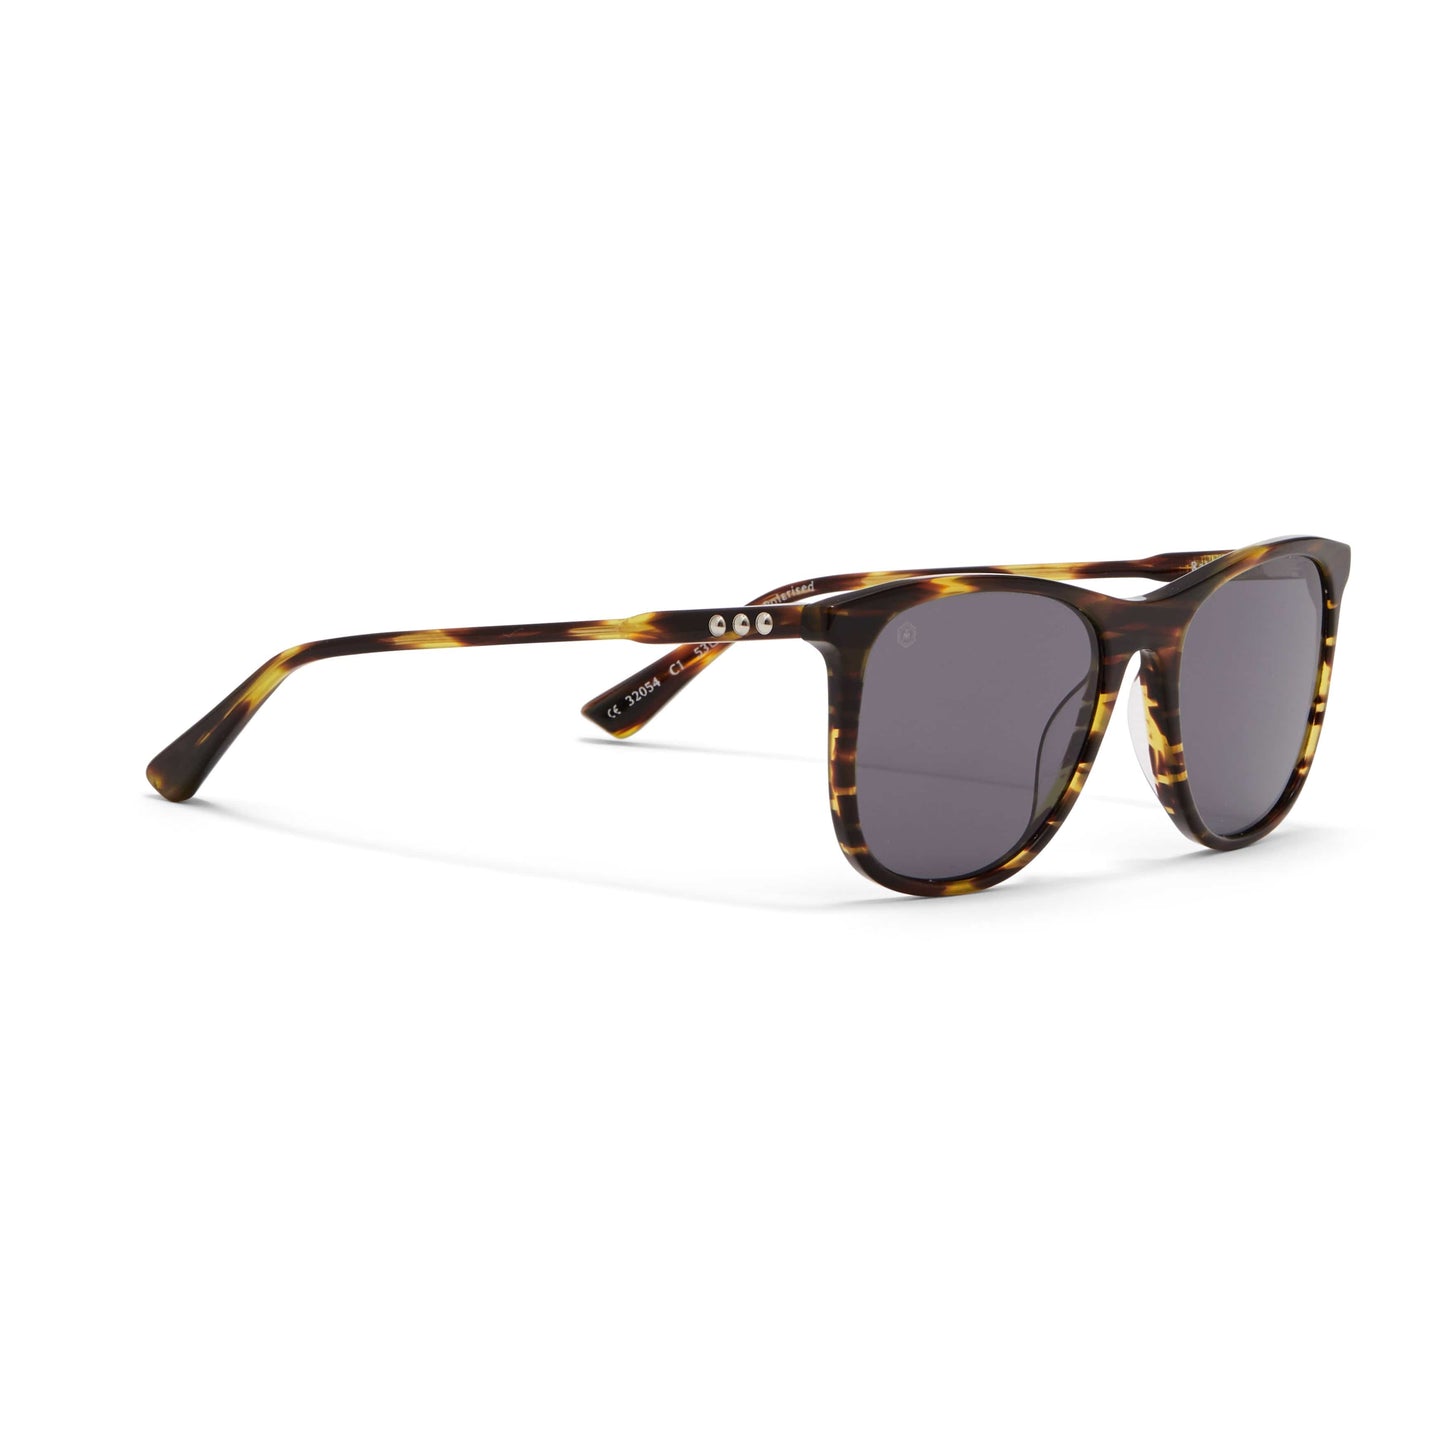 32054-C1 Raleigh Sunglasses